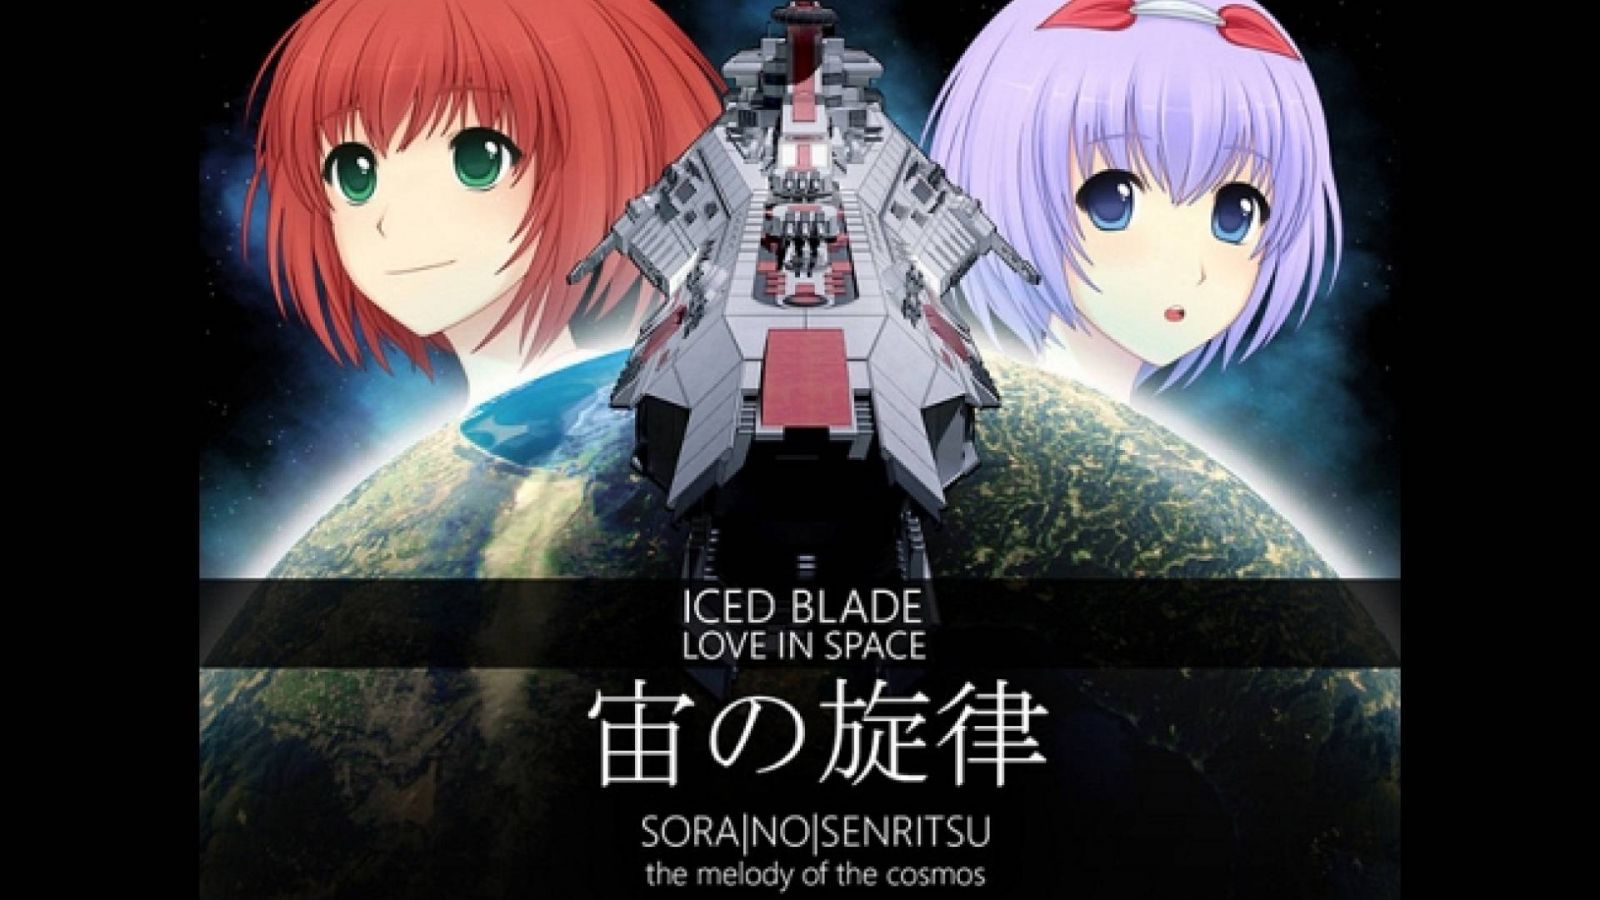 Iced Blade - Sora no senritsu © All Rights Reserved.